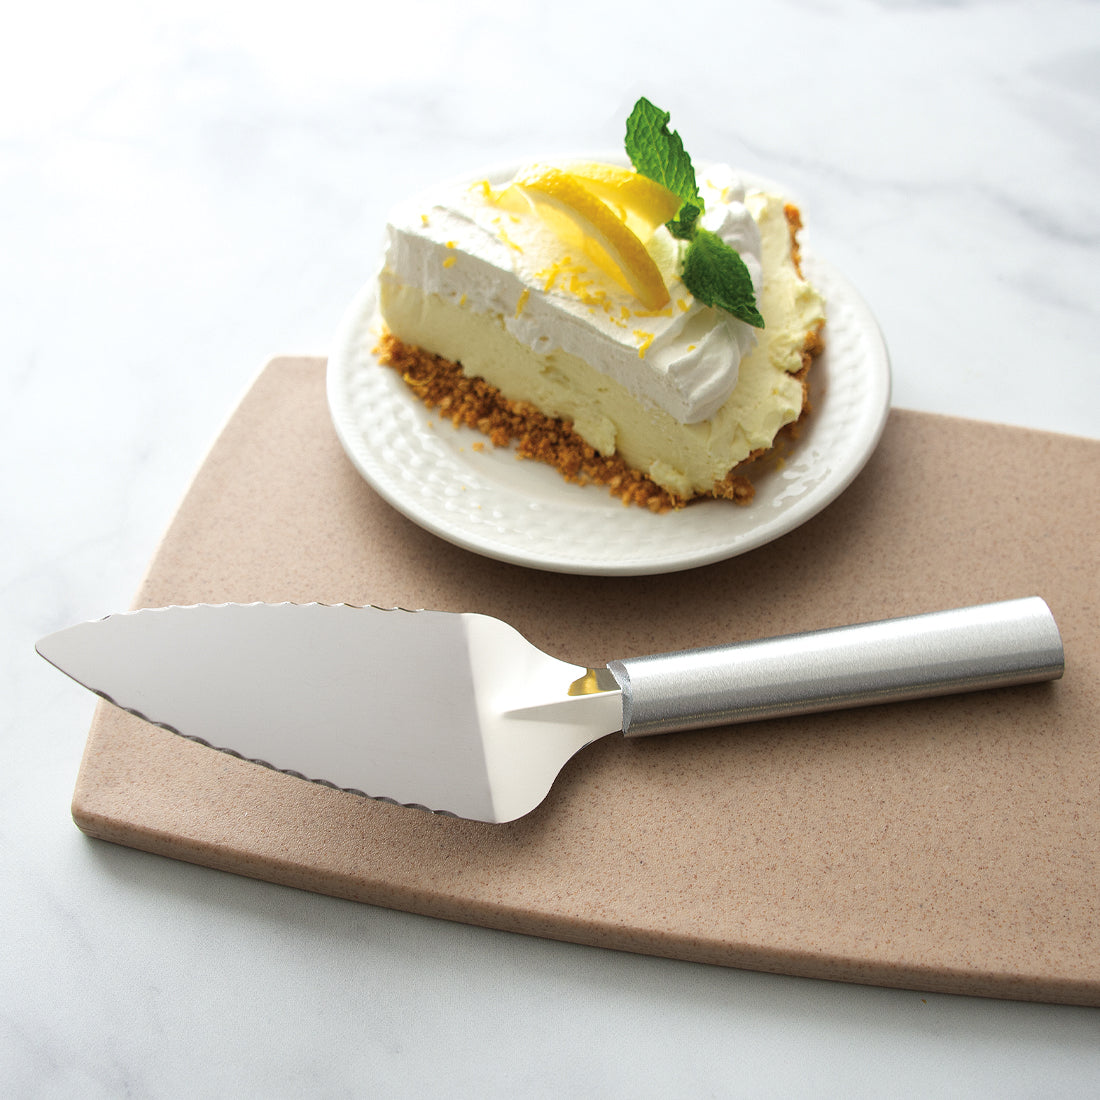 A silver handled Serrated Pie Server next to a piece of lemon merengue pie.